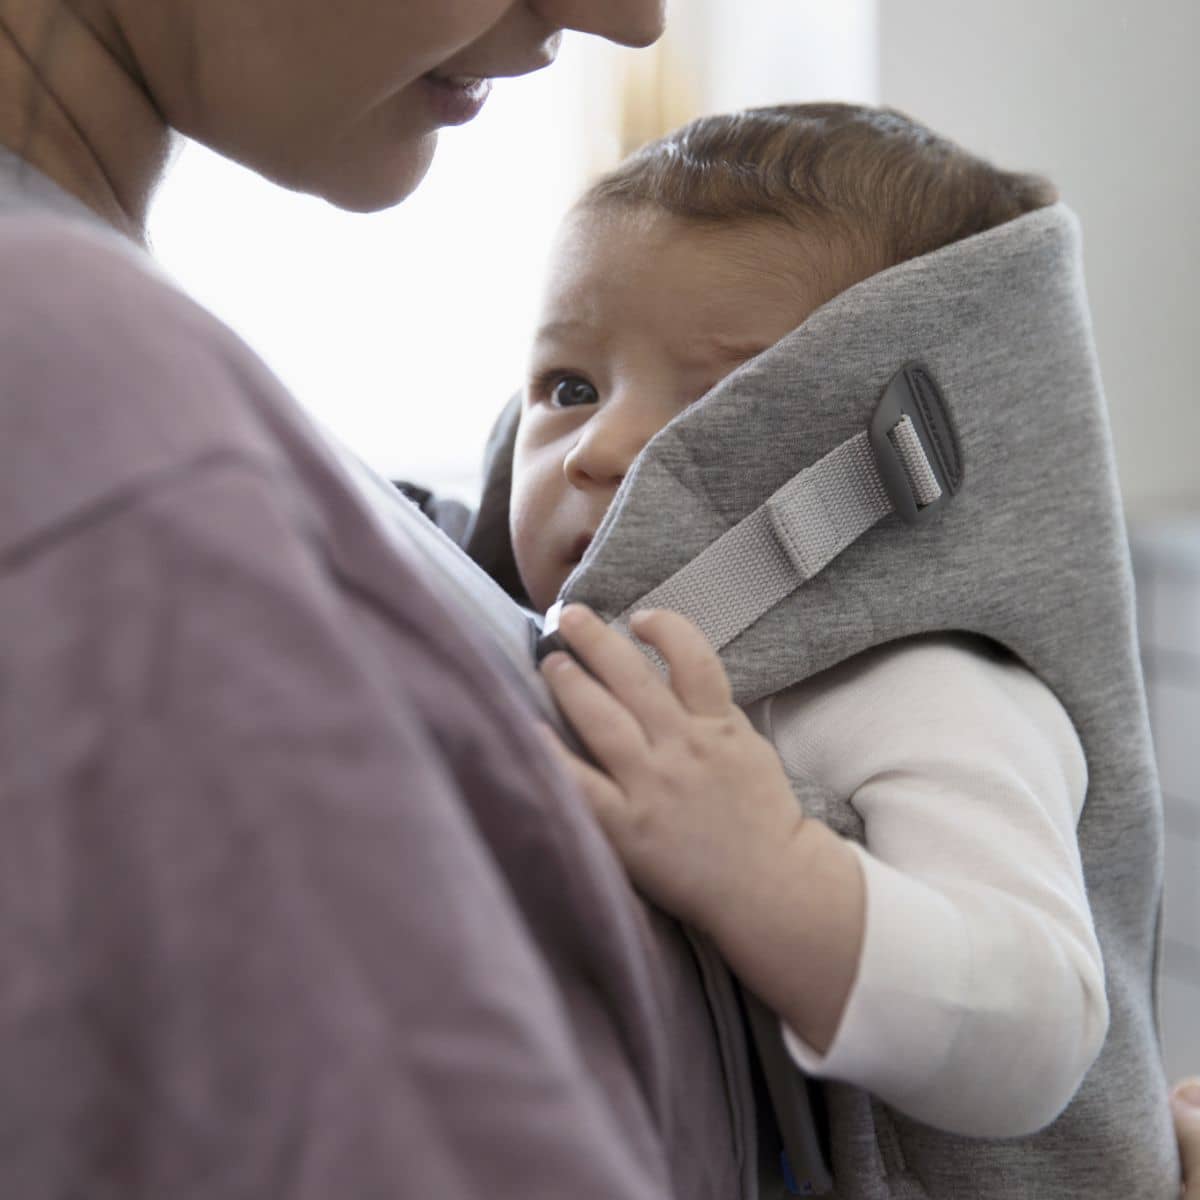 BabyBjorn Baby Carrier Mini - Grey 3D Jersey